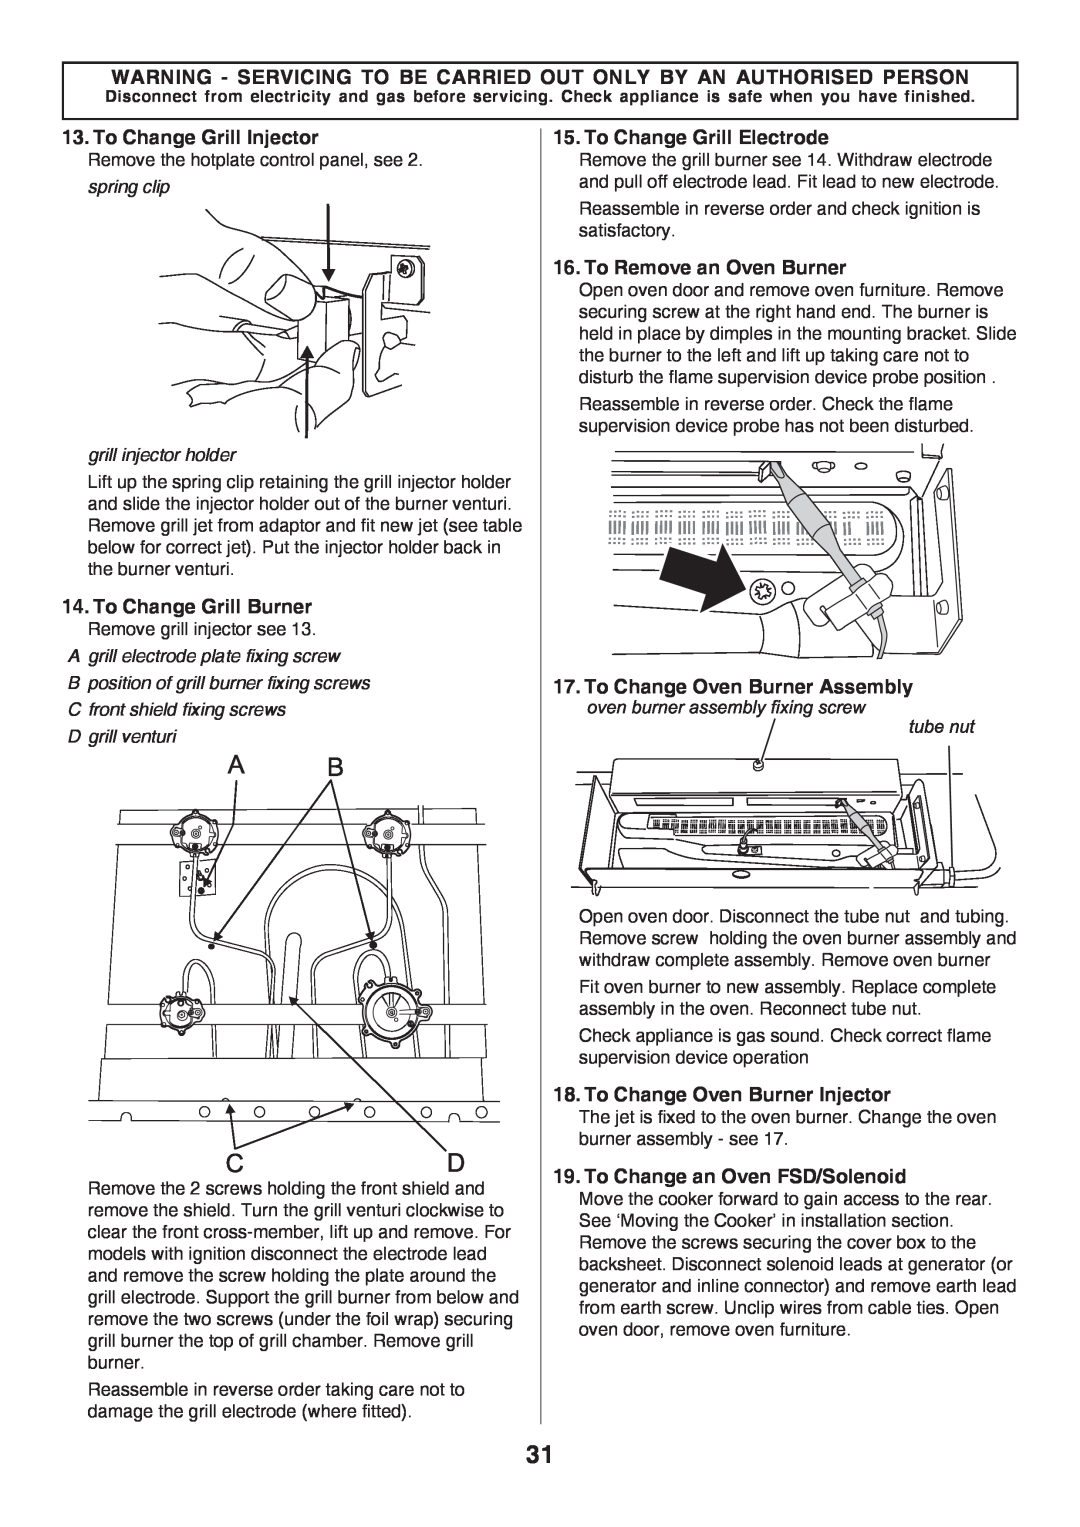 Rangemaster U106140-05 manual To Change Grill Injector, To Change Grill Burner, To Change Grill Electrode 